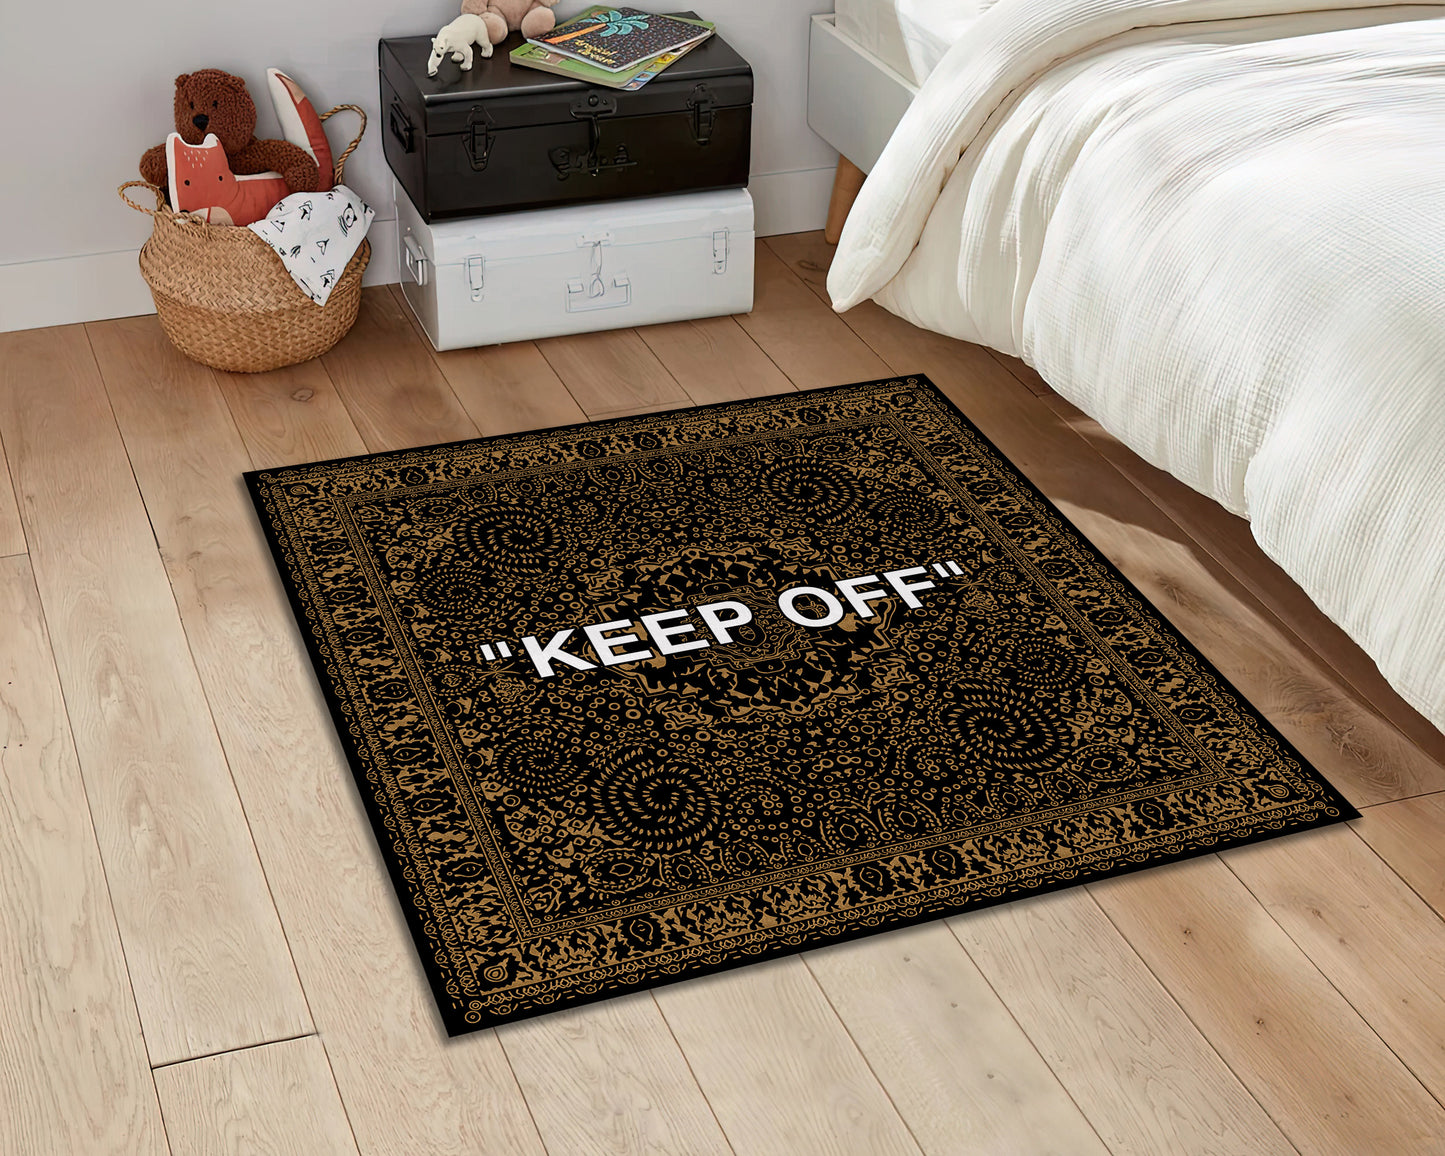 Keep Off Rug, Popular IKEA Carpet, Sneaker Decor, Hypebeast Mat, Keepoff Themed Rug